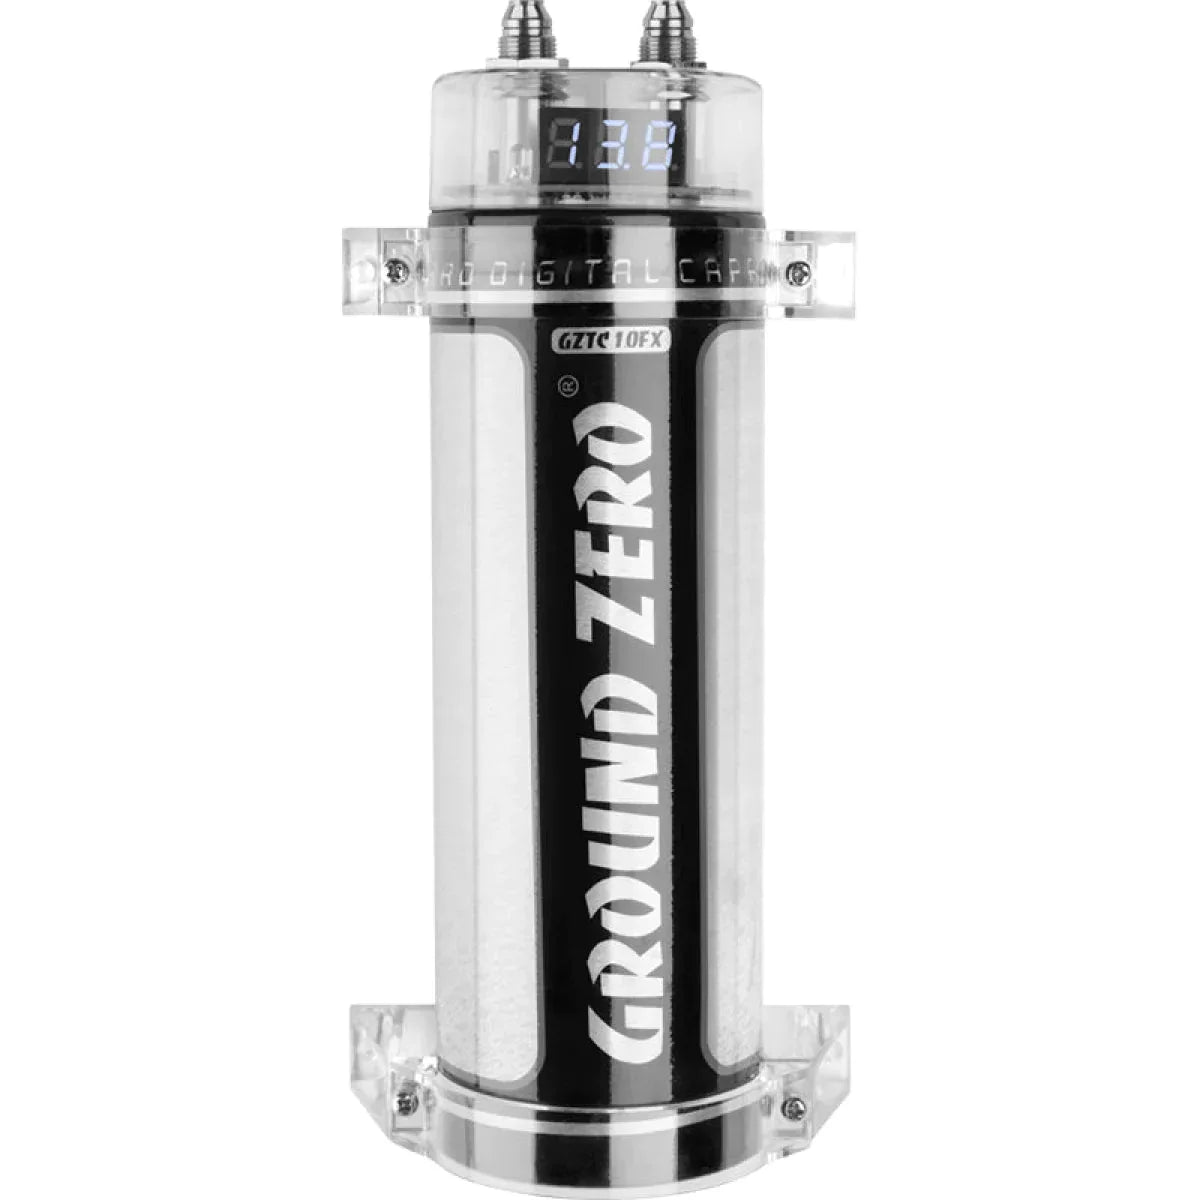 Buy Ground Zero GZTC 1.0FX capacitor 